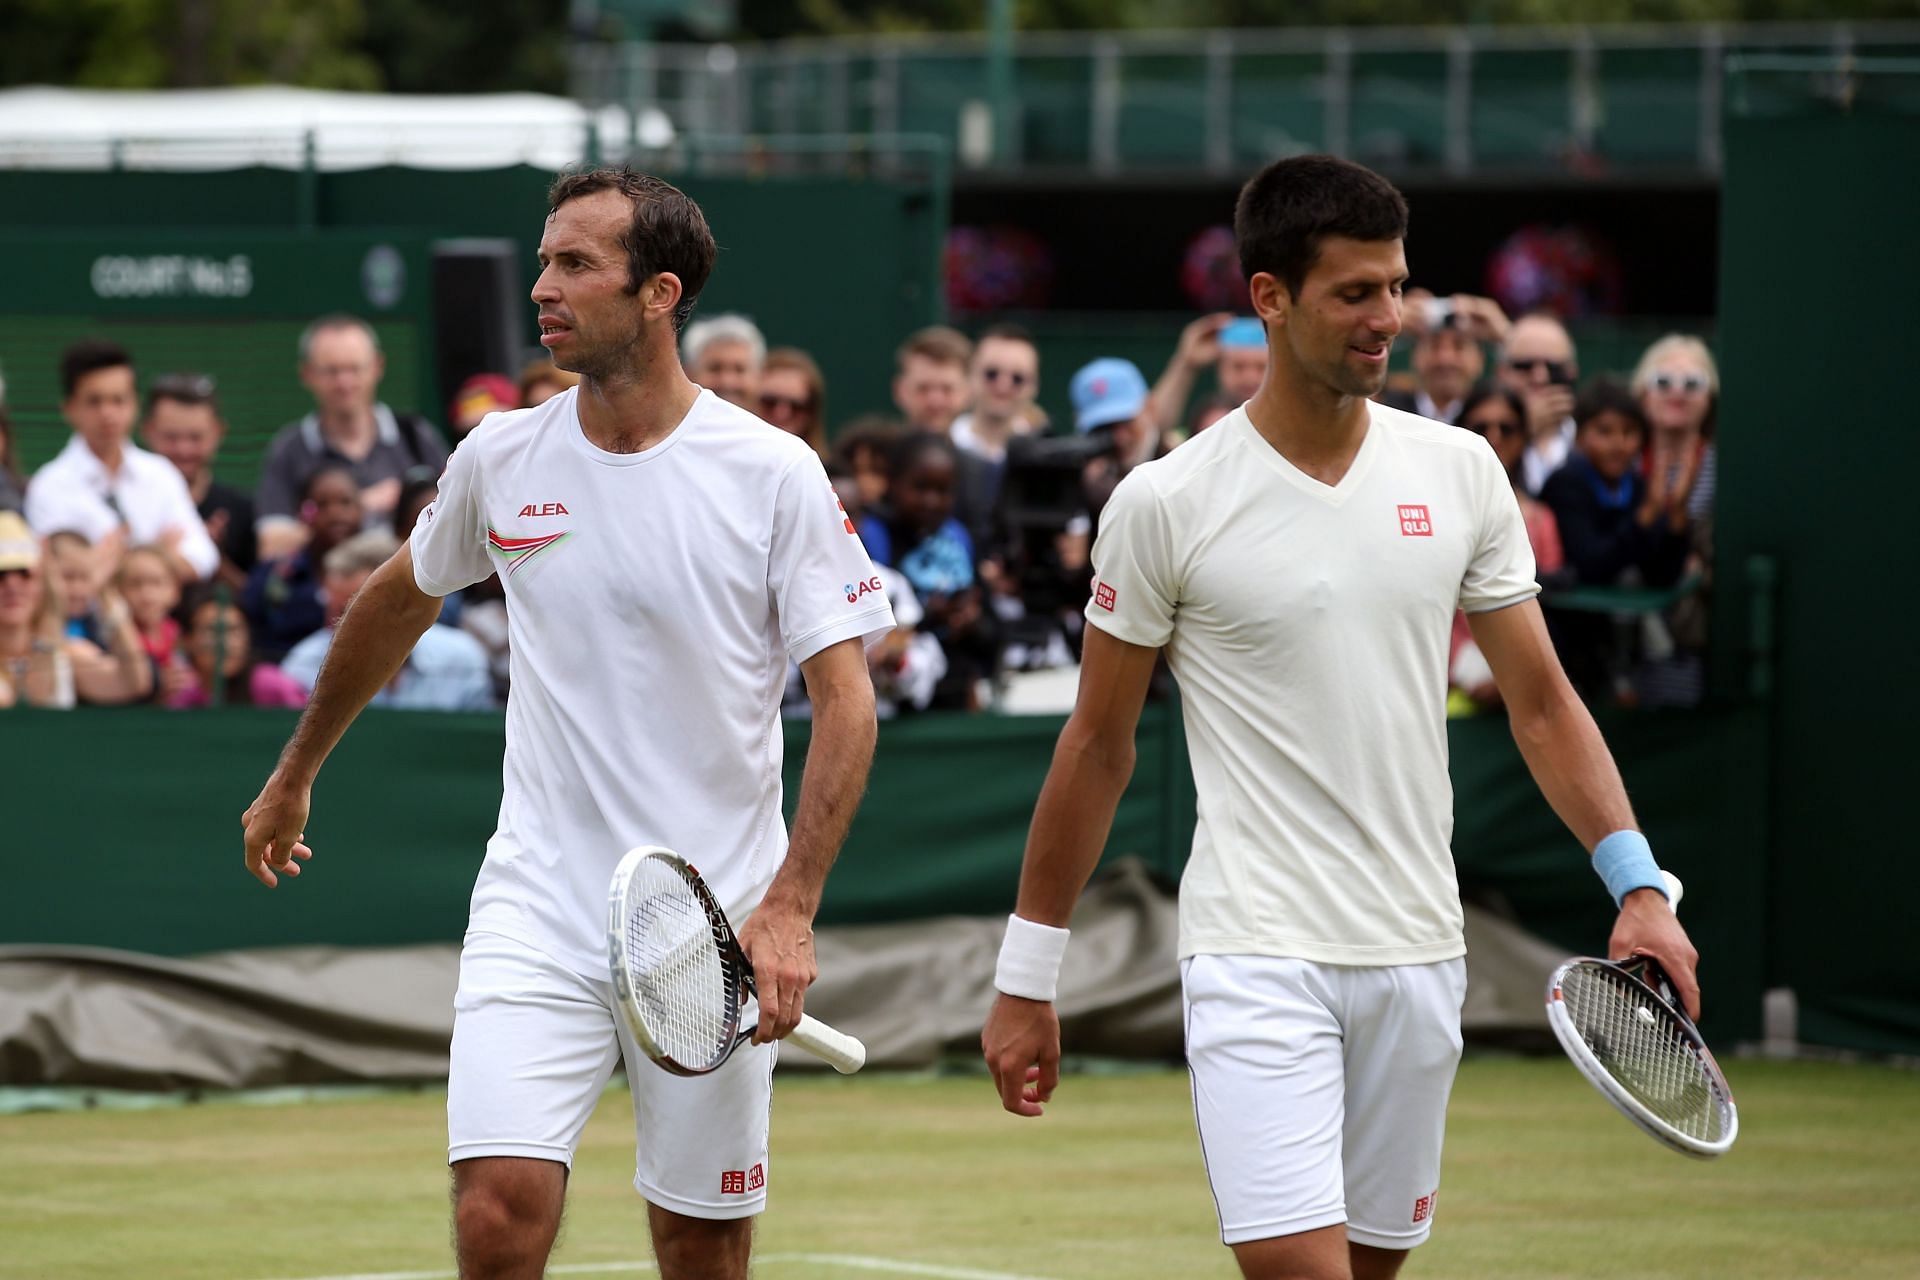 Radek Stepanek training with Novak Djokovic at Wimbledon 2014